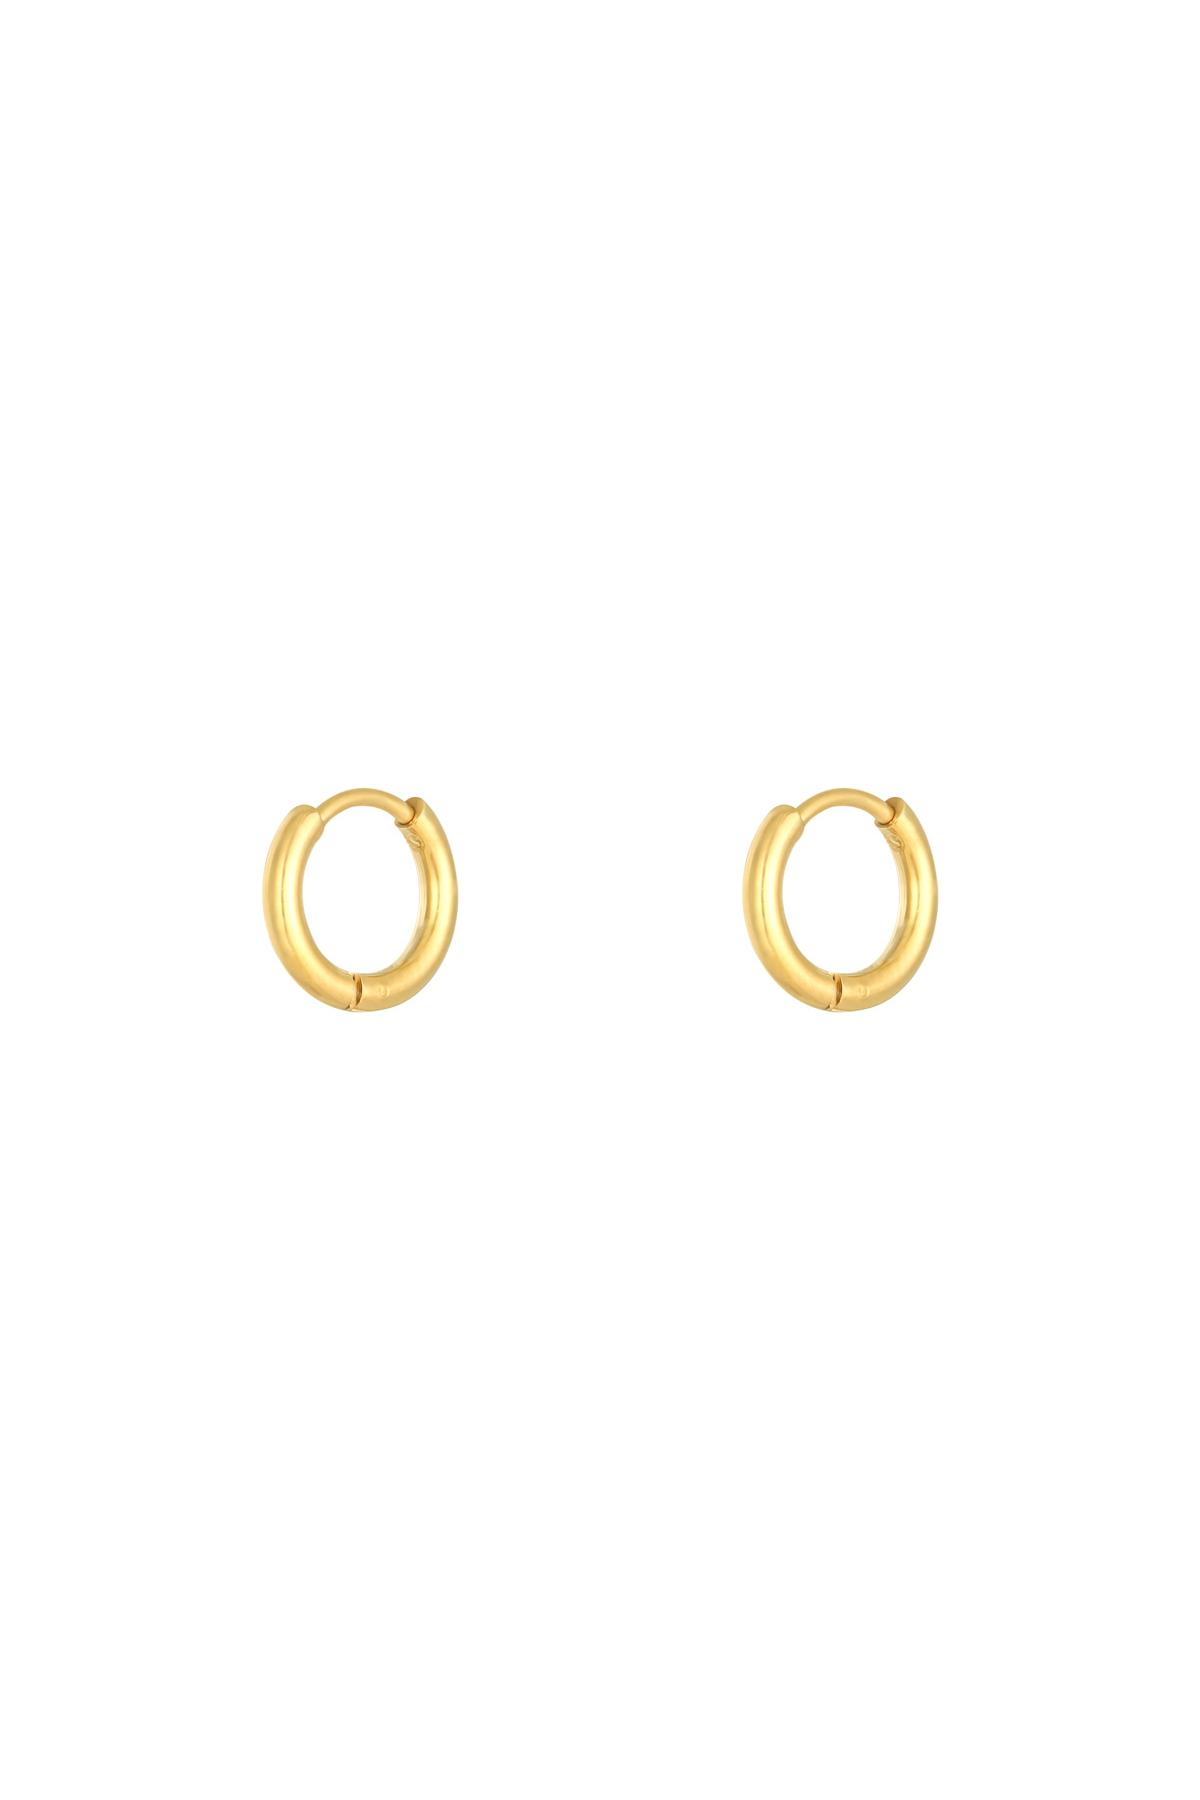 Earrings Little Hoops 1,2cm Gold Stainless Steel h5 